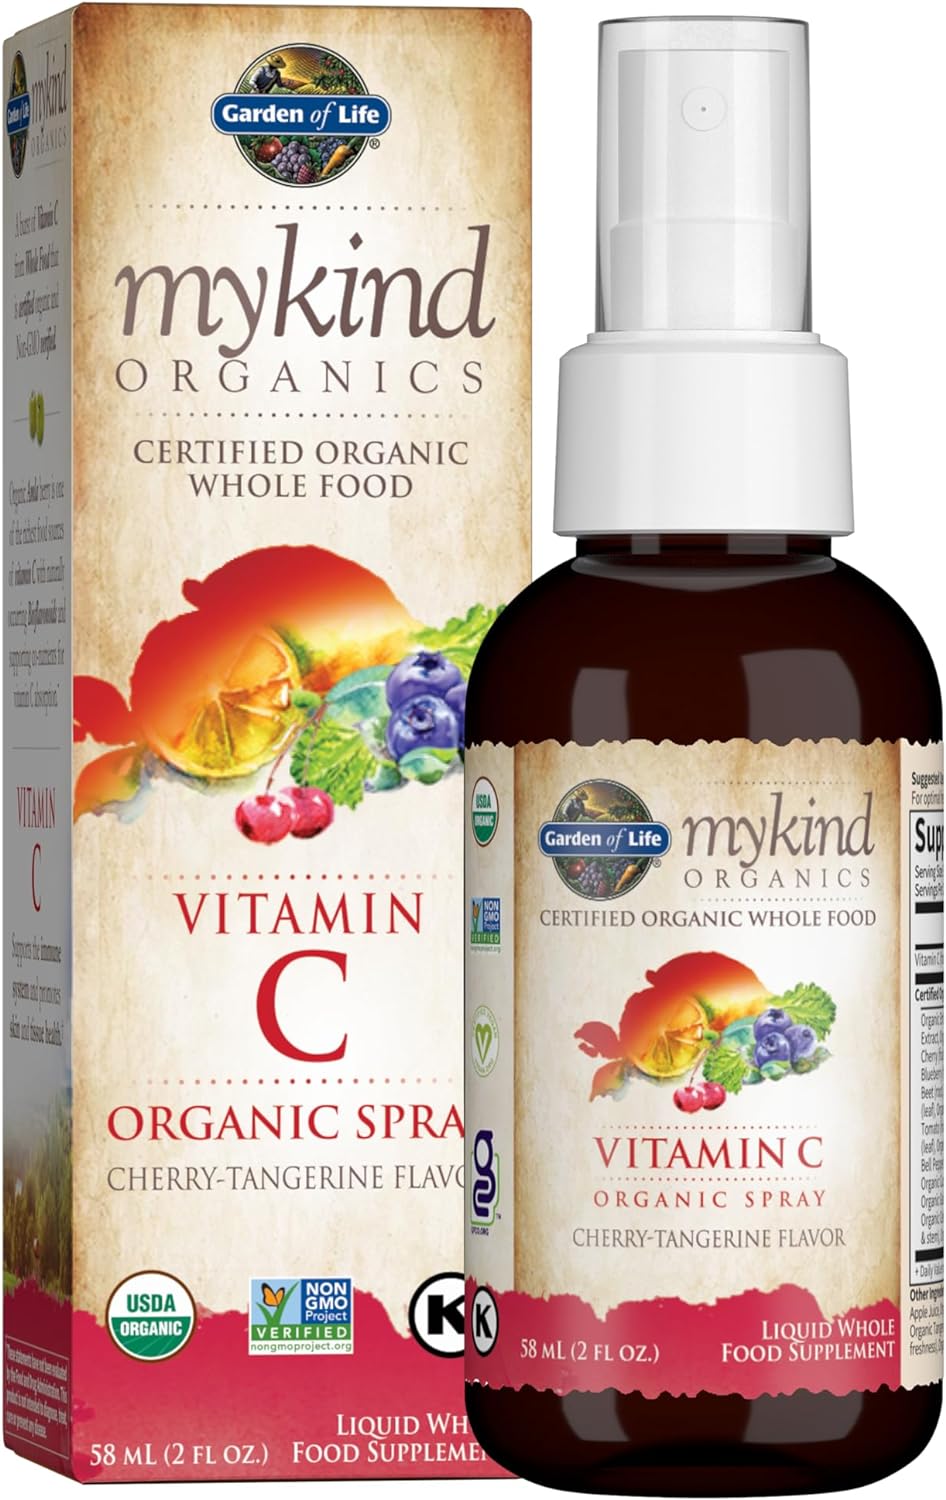 Garden of Life mykind Organics Vitamin C for Kids and Adults, Organic Vitamin C Spray for Skin Health - Cherry Tangerine, Vitamin C Supplement Antioxidant for Immune Support, 2 fl oz Liquid Drops